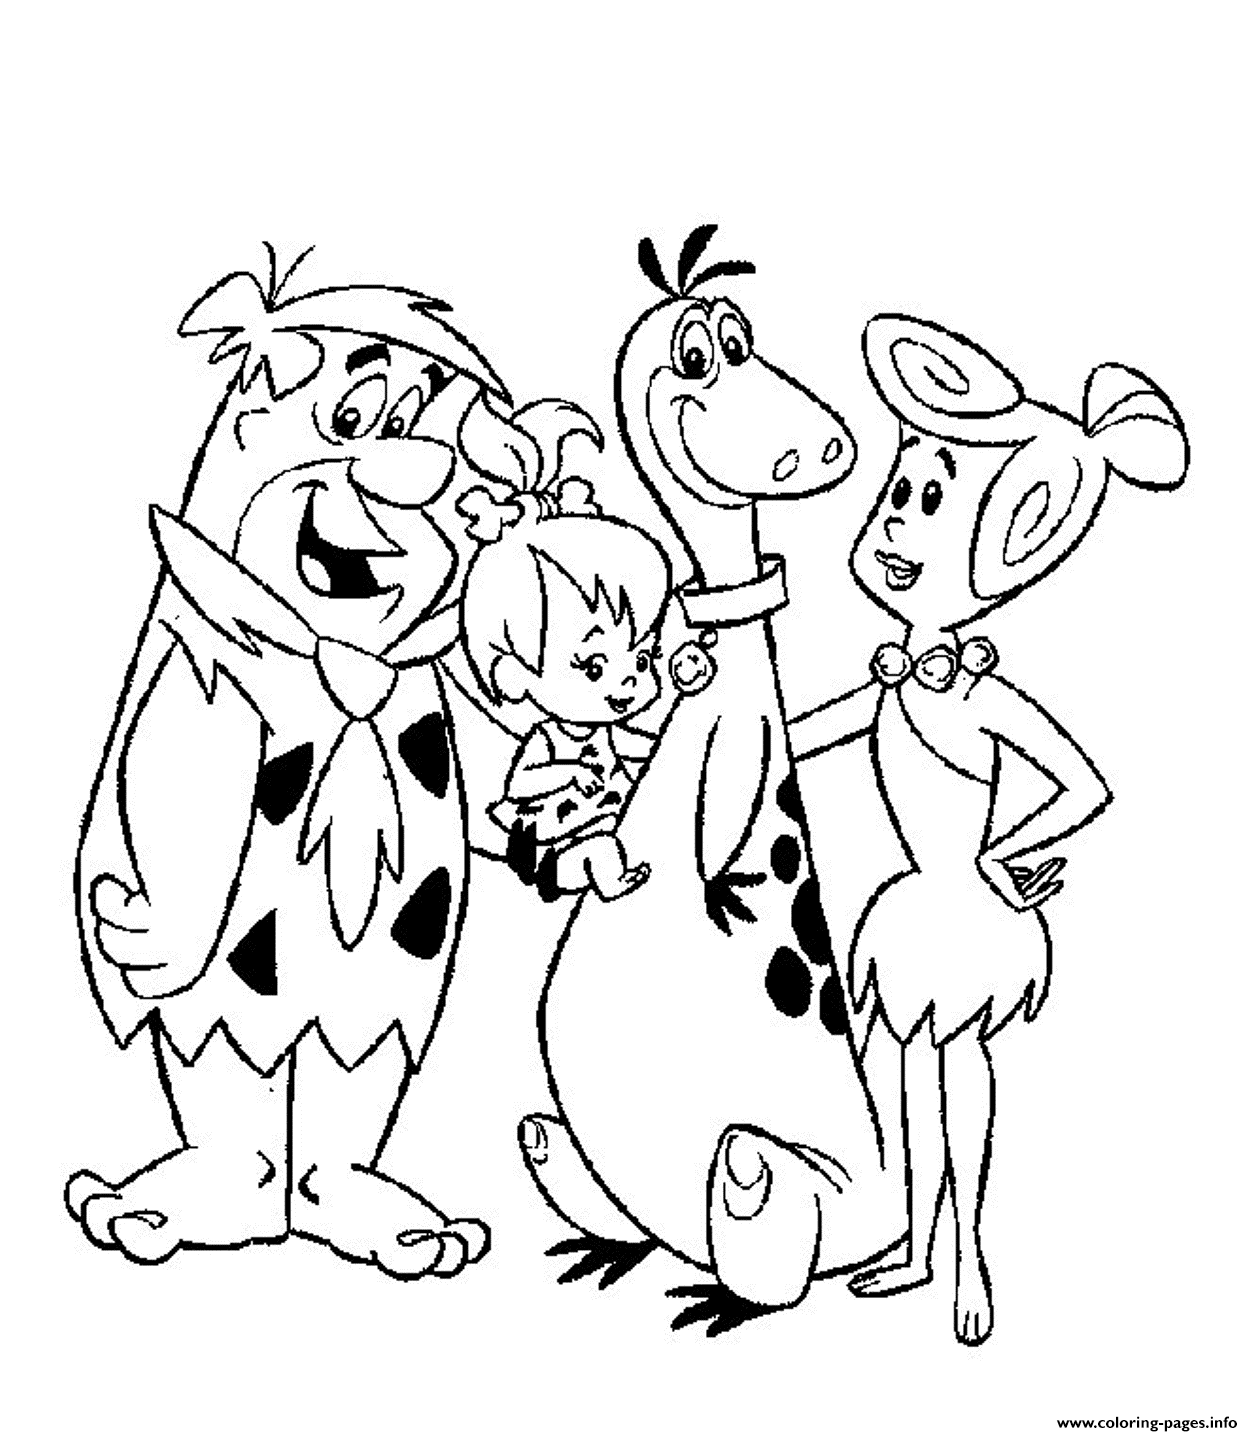 The Flintstones Family Cartoon Sf596 coloring